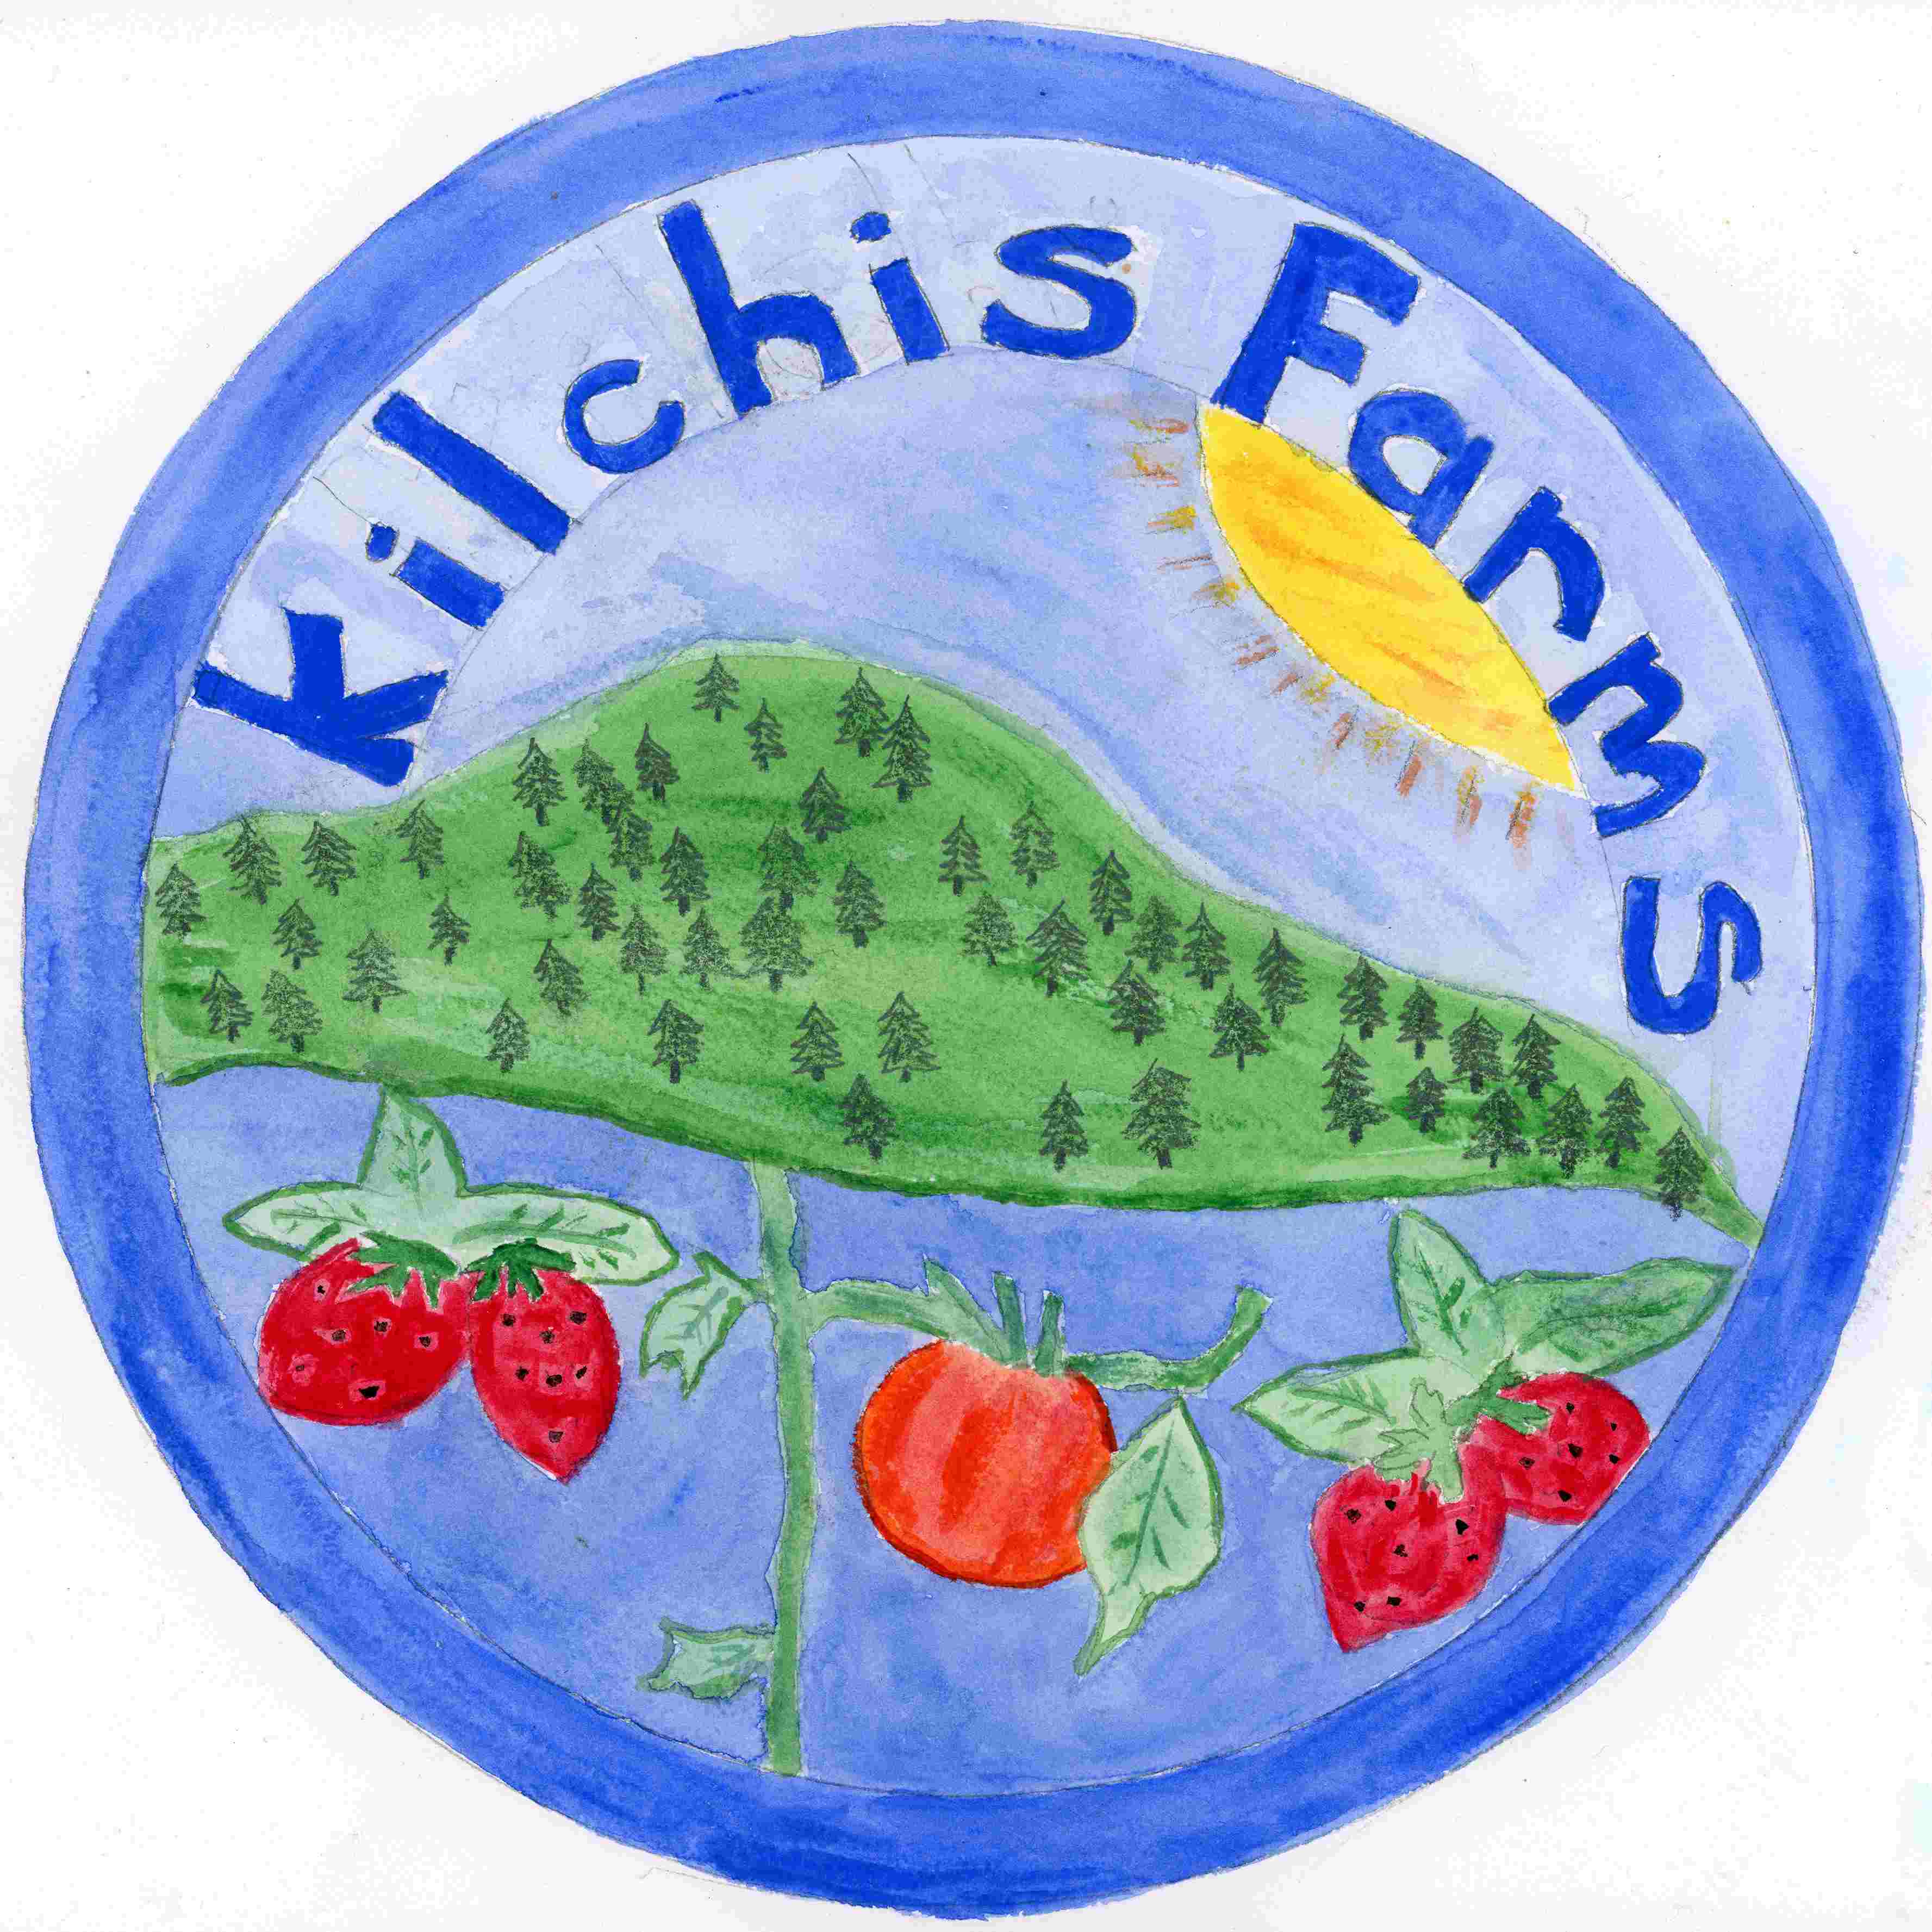 Kilchis Farms